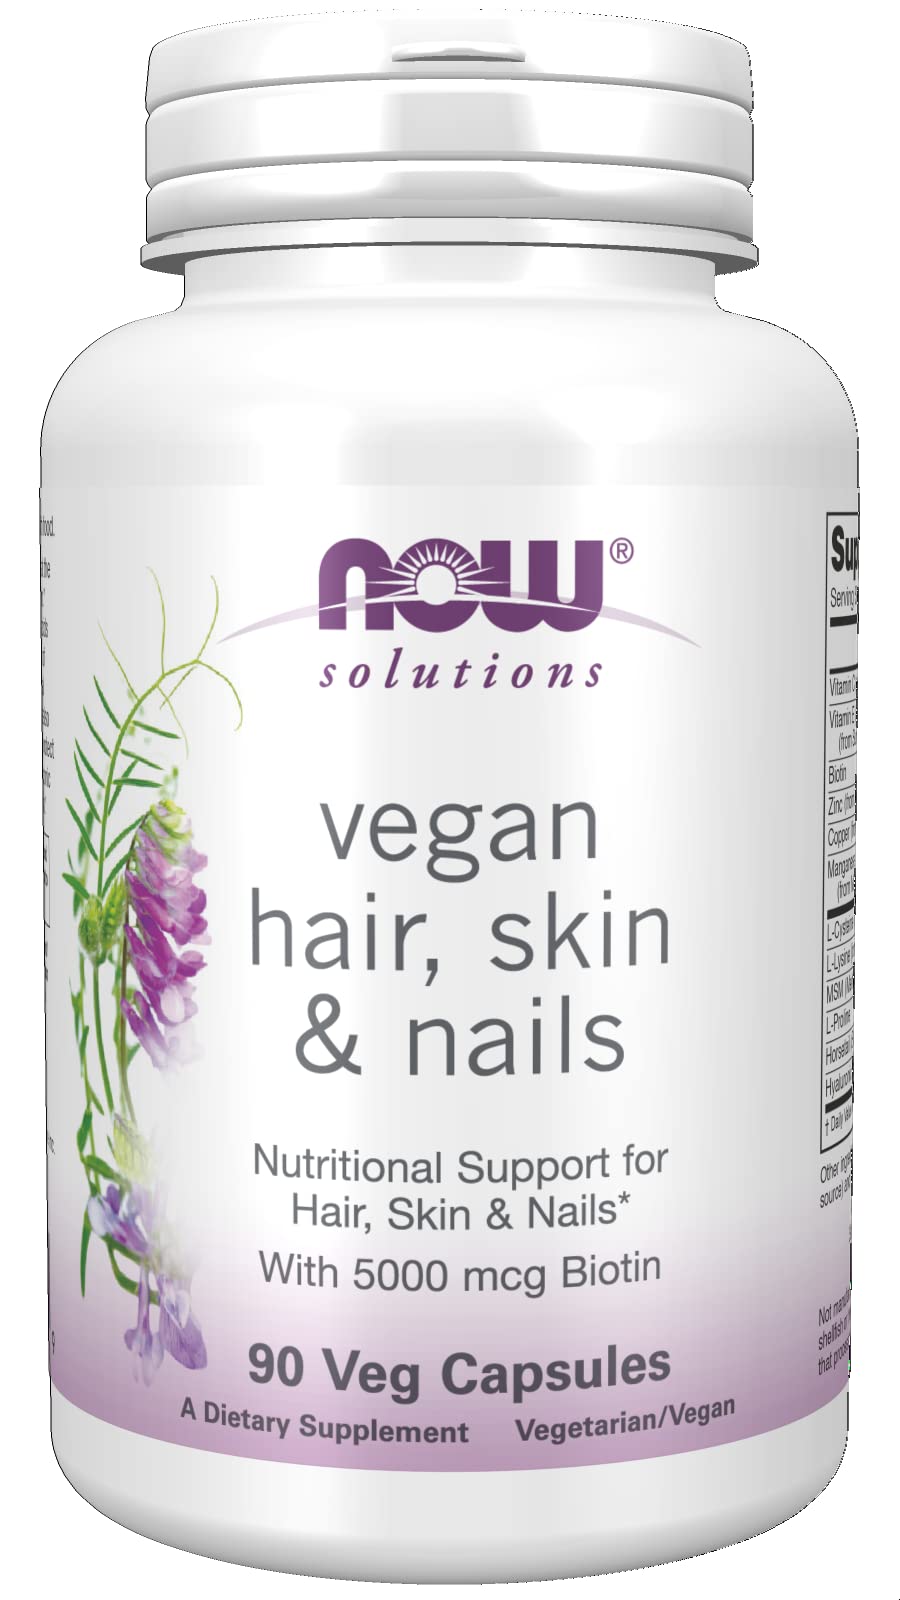 [Australia] - NOW Solutions, Vegan Hair, Skin & Nails, Nutritional Support with 5,000 mcg Biotin, 90 Veg Capsules 